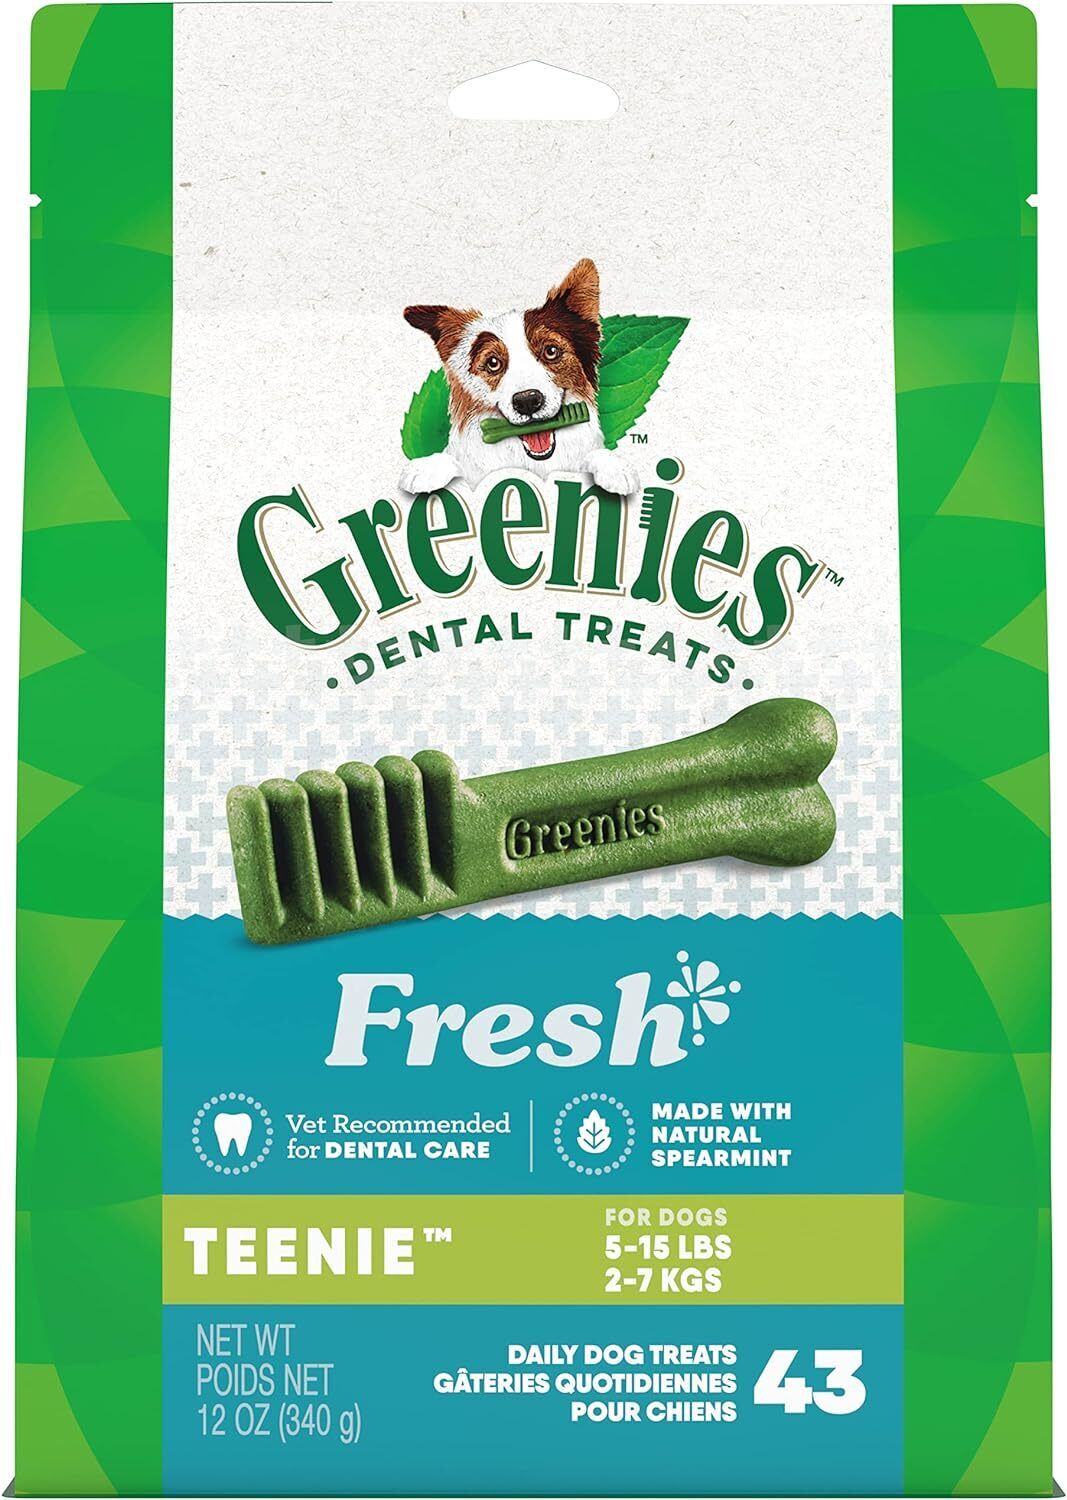 Greenies TEENIE Natural Dental Care Dog Treats Mint Fresh Flavor, 12 oz. Pack (4